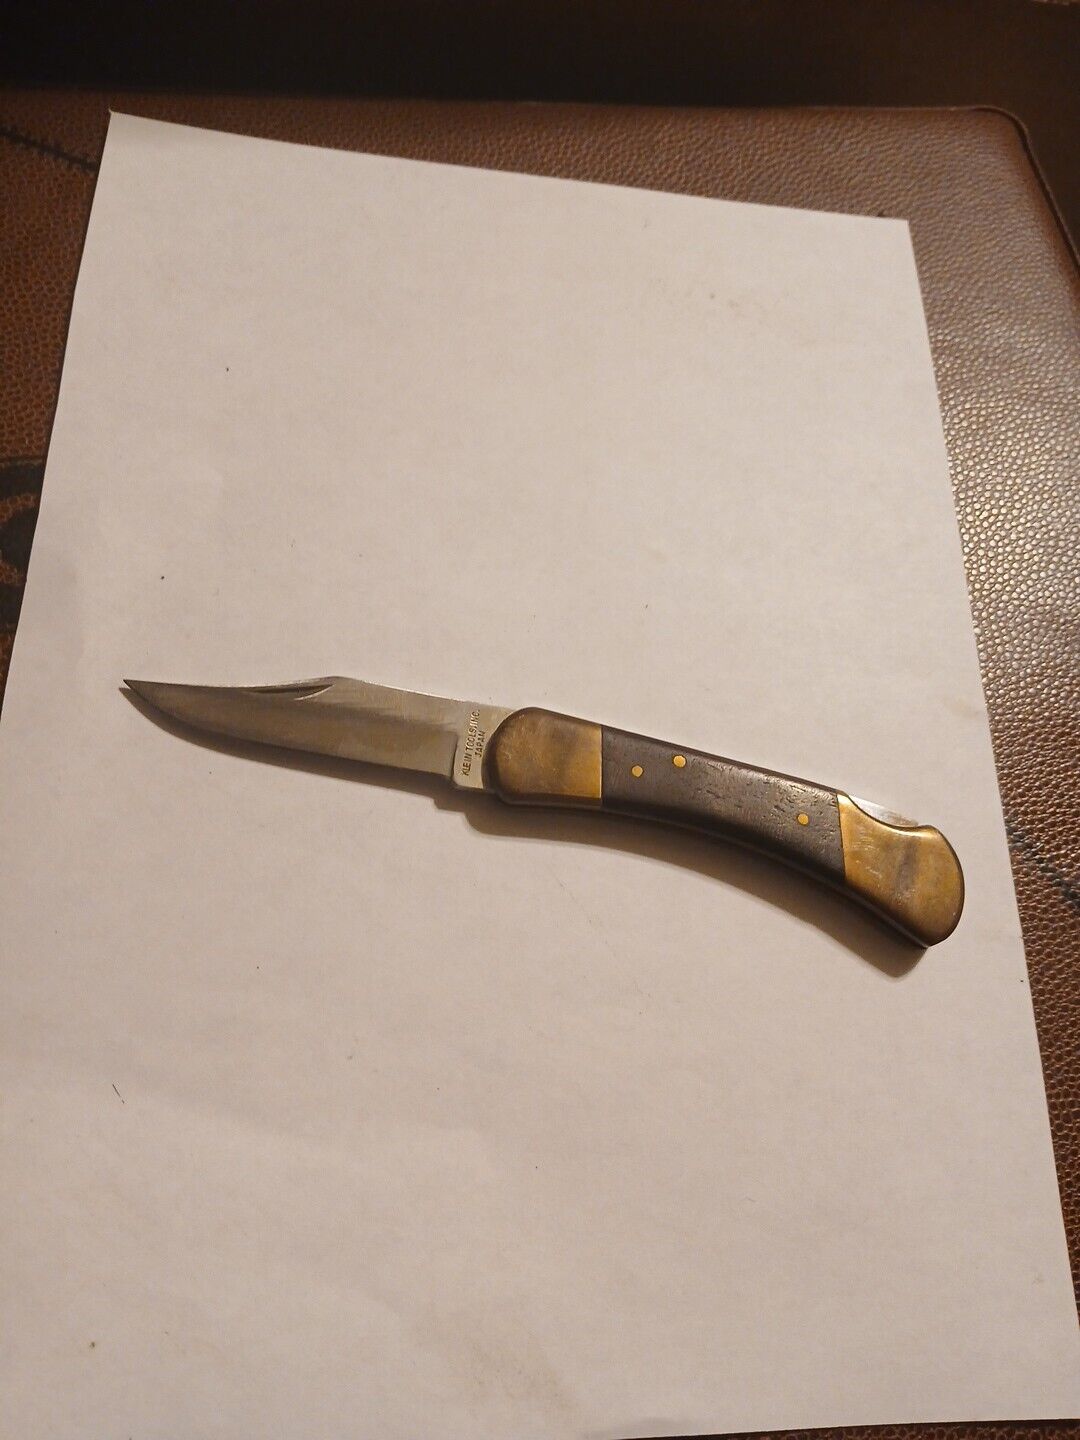 Klein Tools Lockblade Folding Pocket Knife 44035 Japan